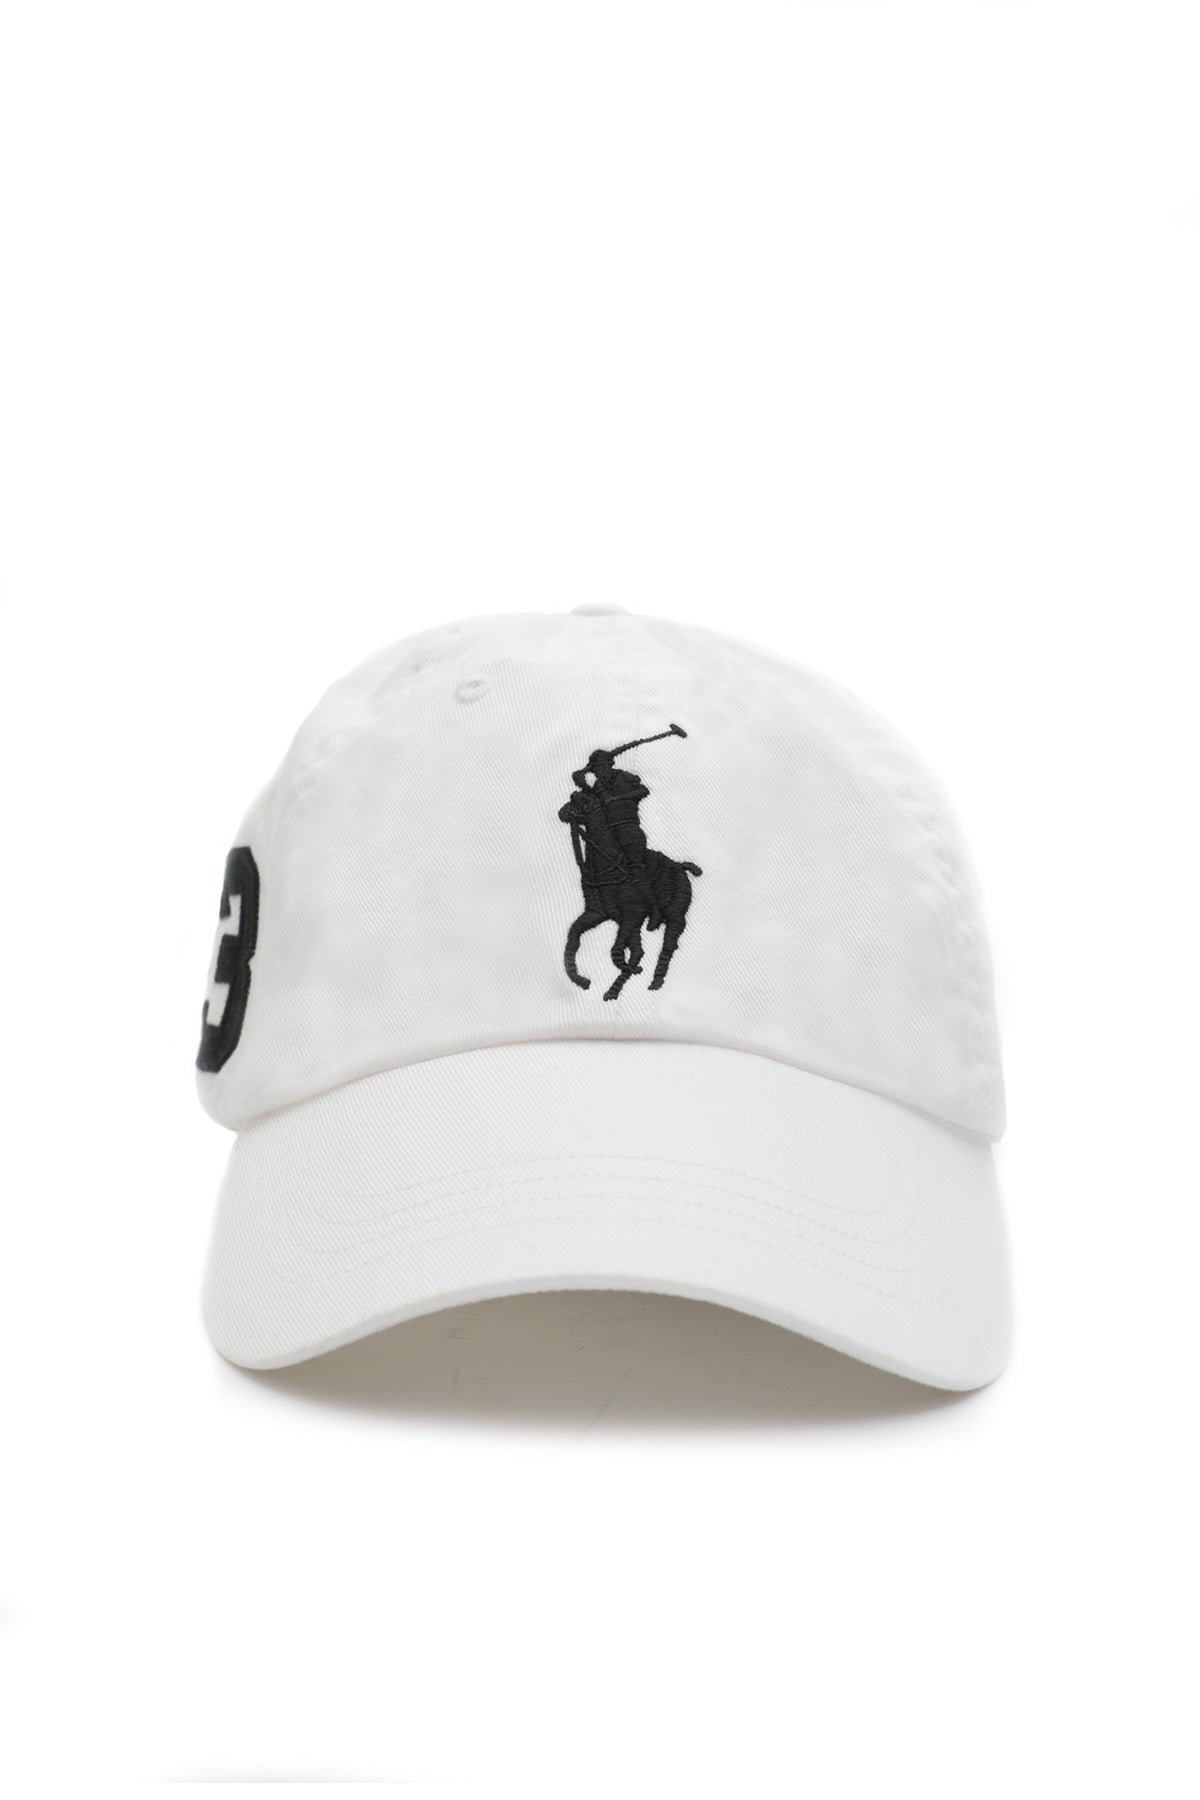 Polo Ralph Lauren Şapka-Libas Trendy Fashion Store